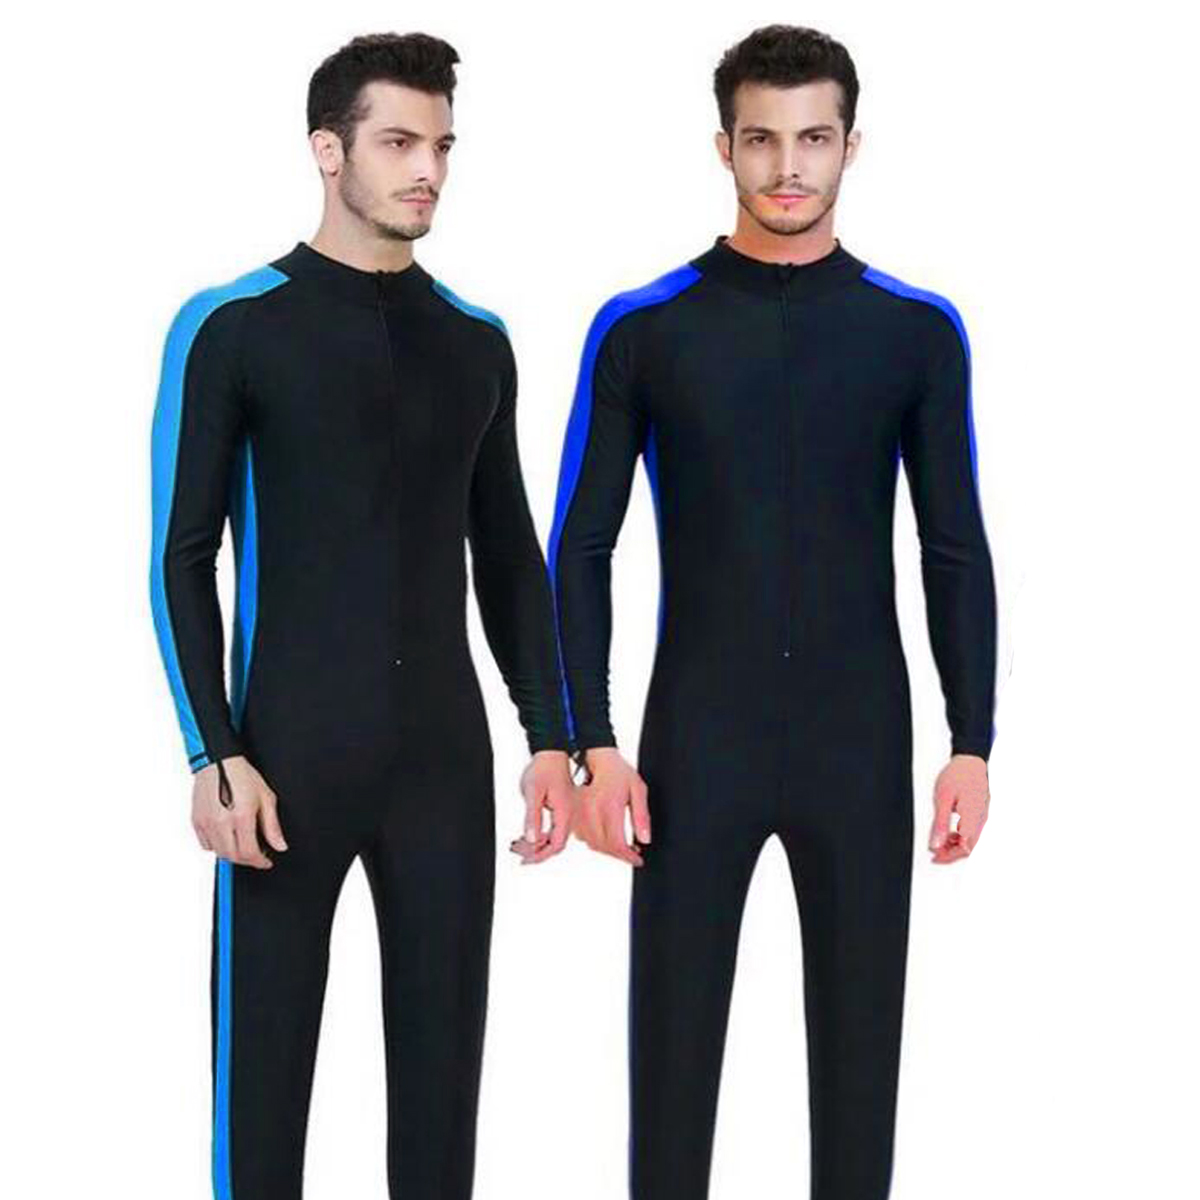 Unisex-Full-Body-Diving-Suit-Men-Women-Scuba-Diving-Wetsuit-Swimming-Surfing-UV-Protection-Snorkelin-1714664-3